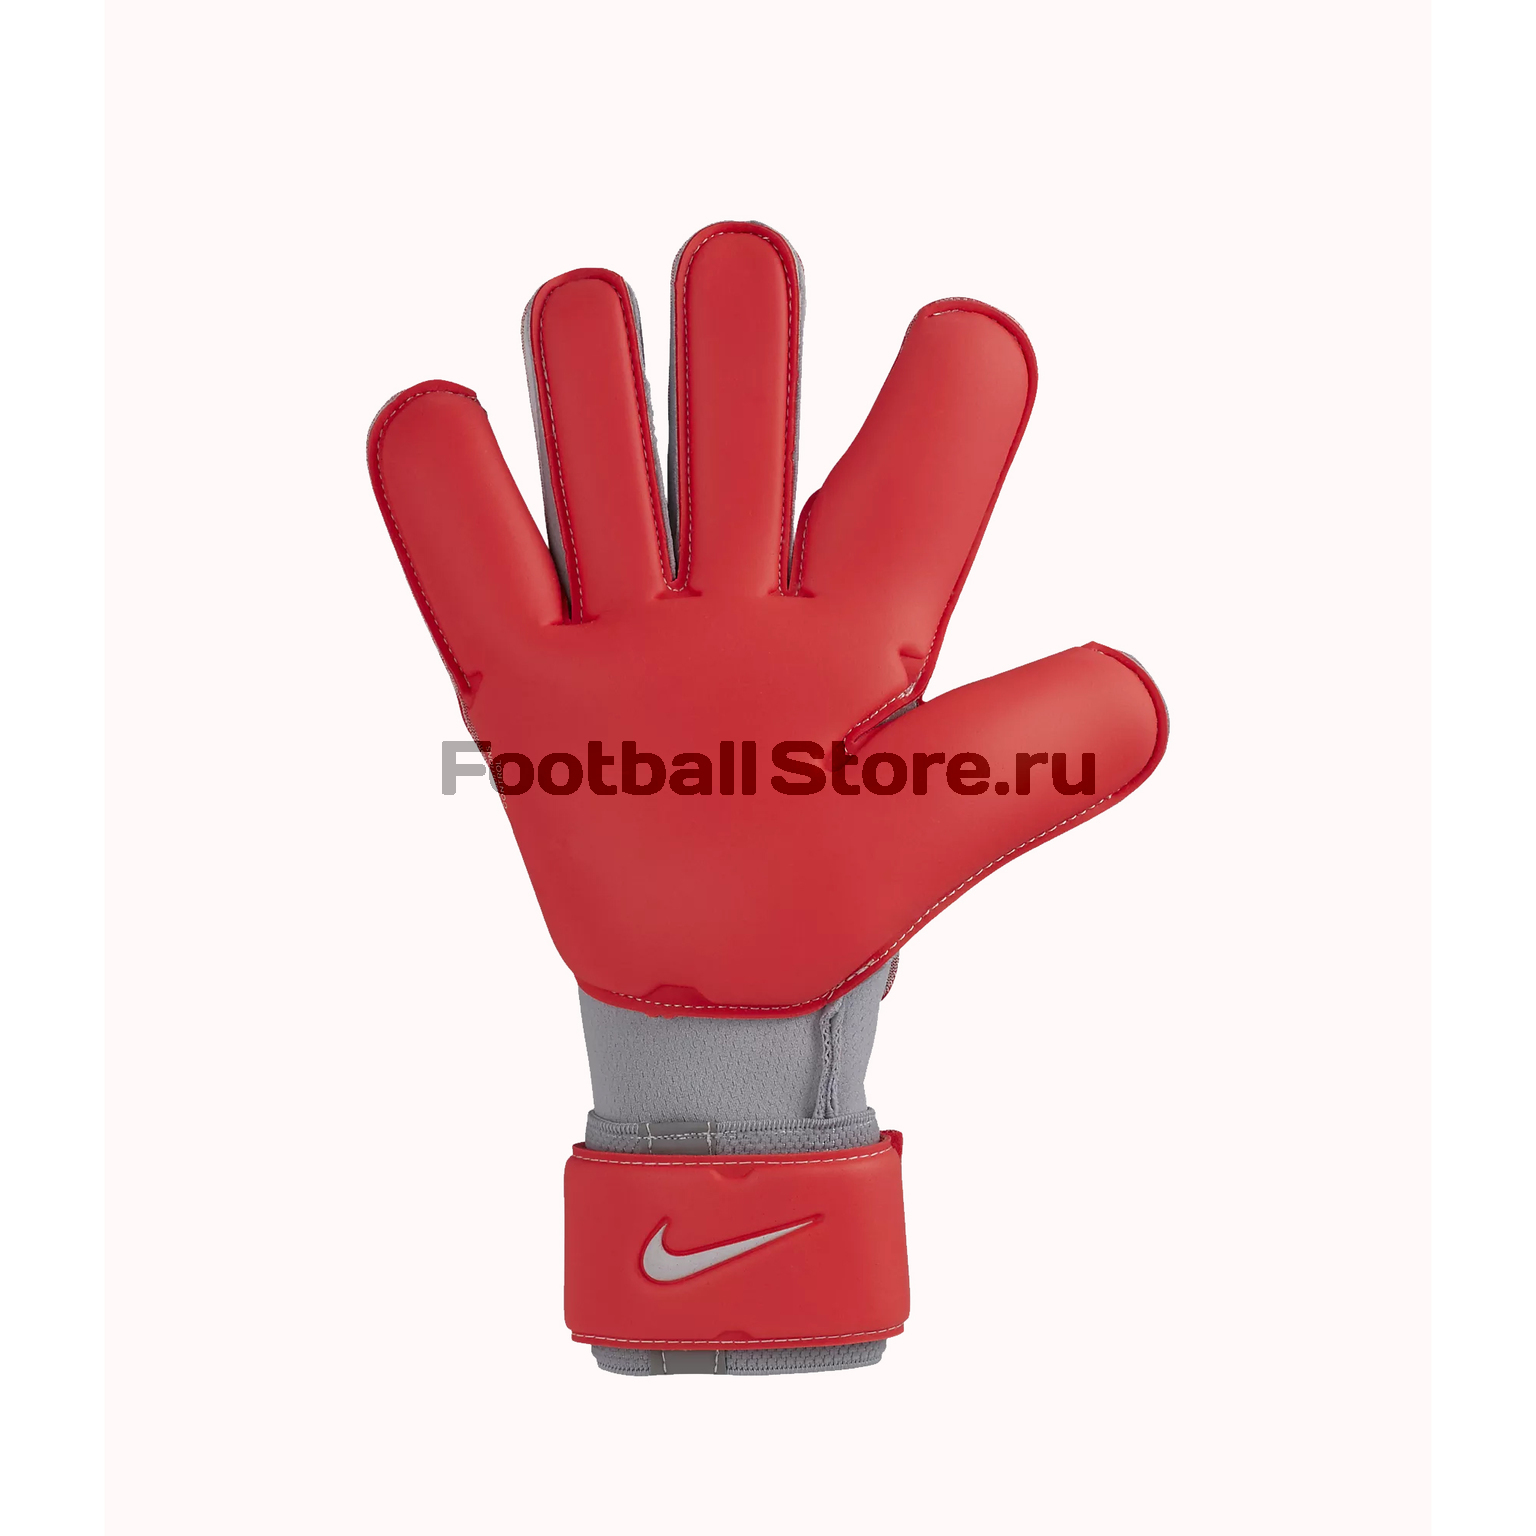 Вратарские перчатки Nike Vapor Grip3 GS0352-671